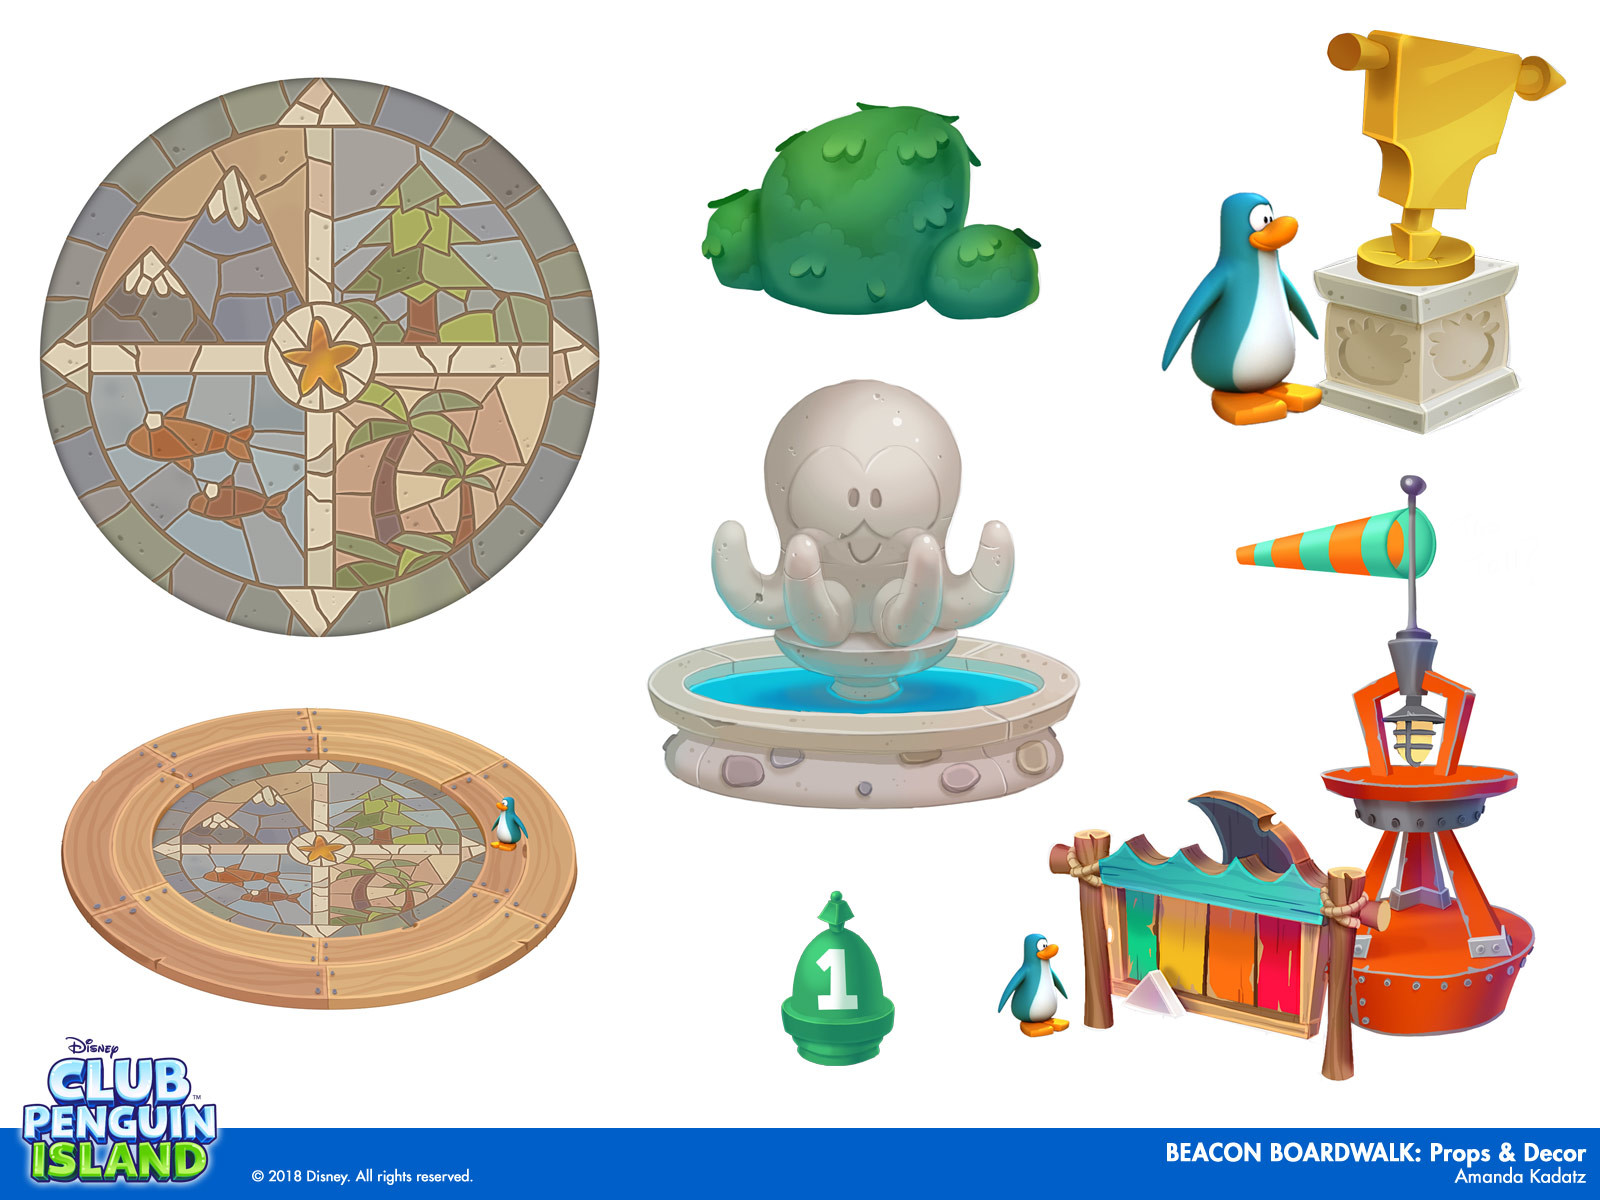 ArtStation - Club Penguin Island: Items & Icons, Amanda K.